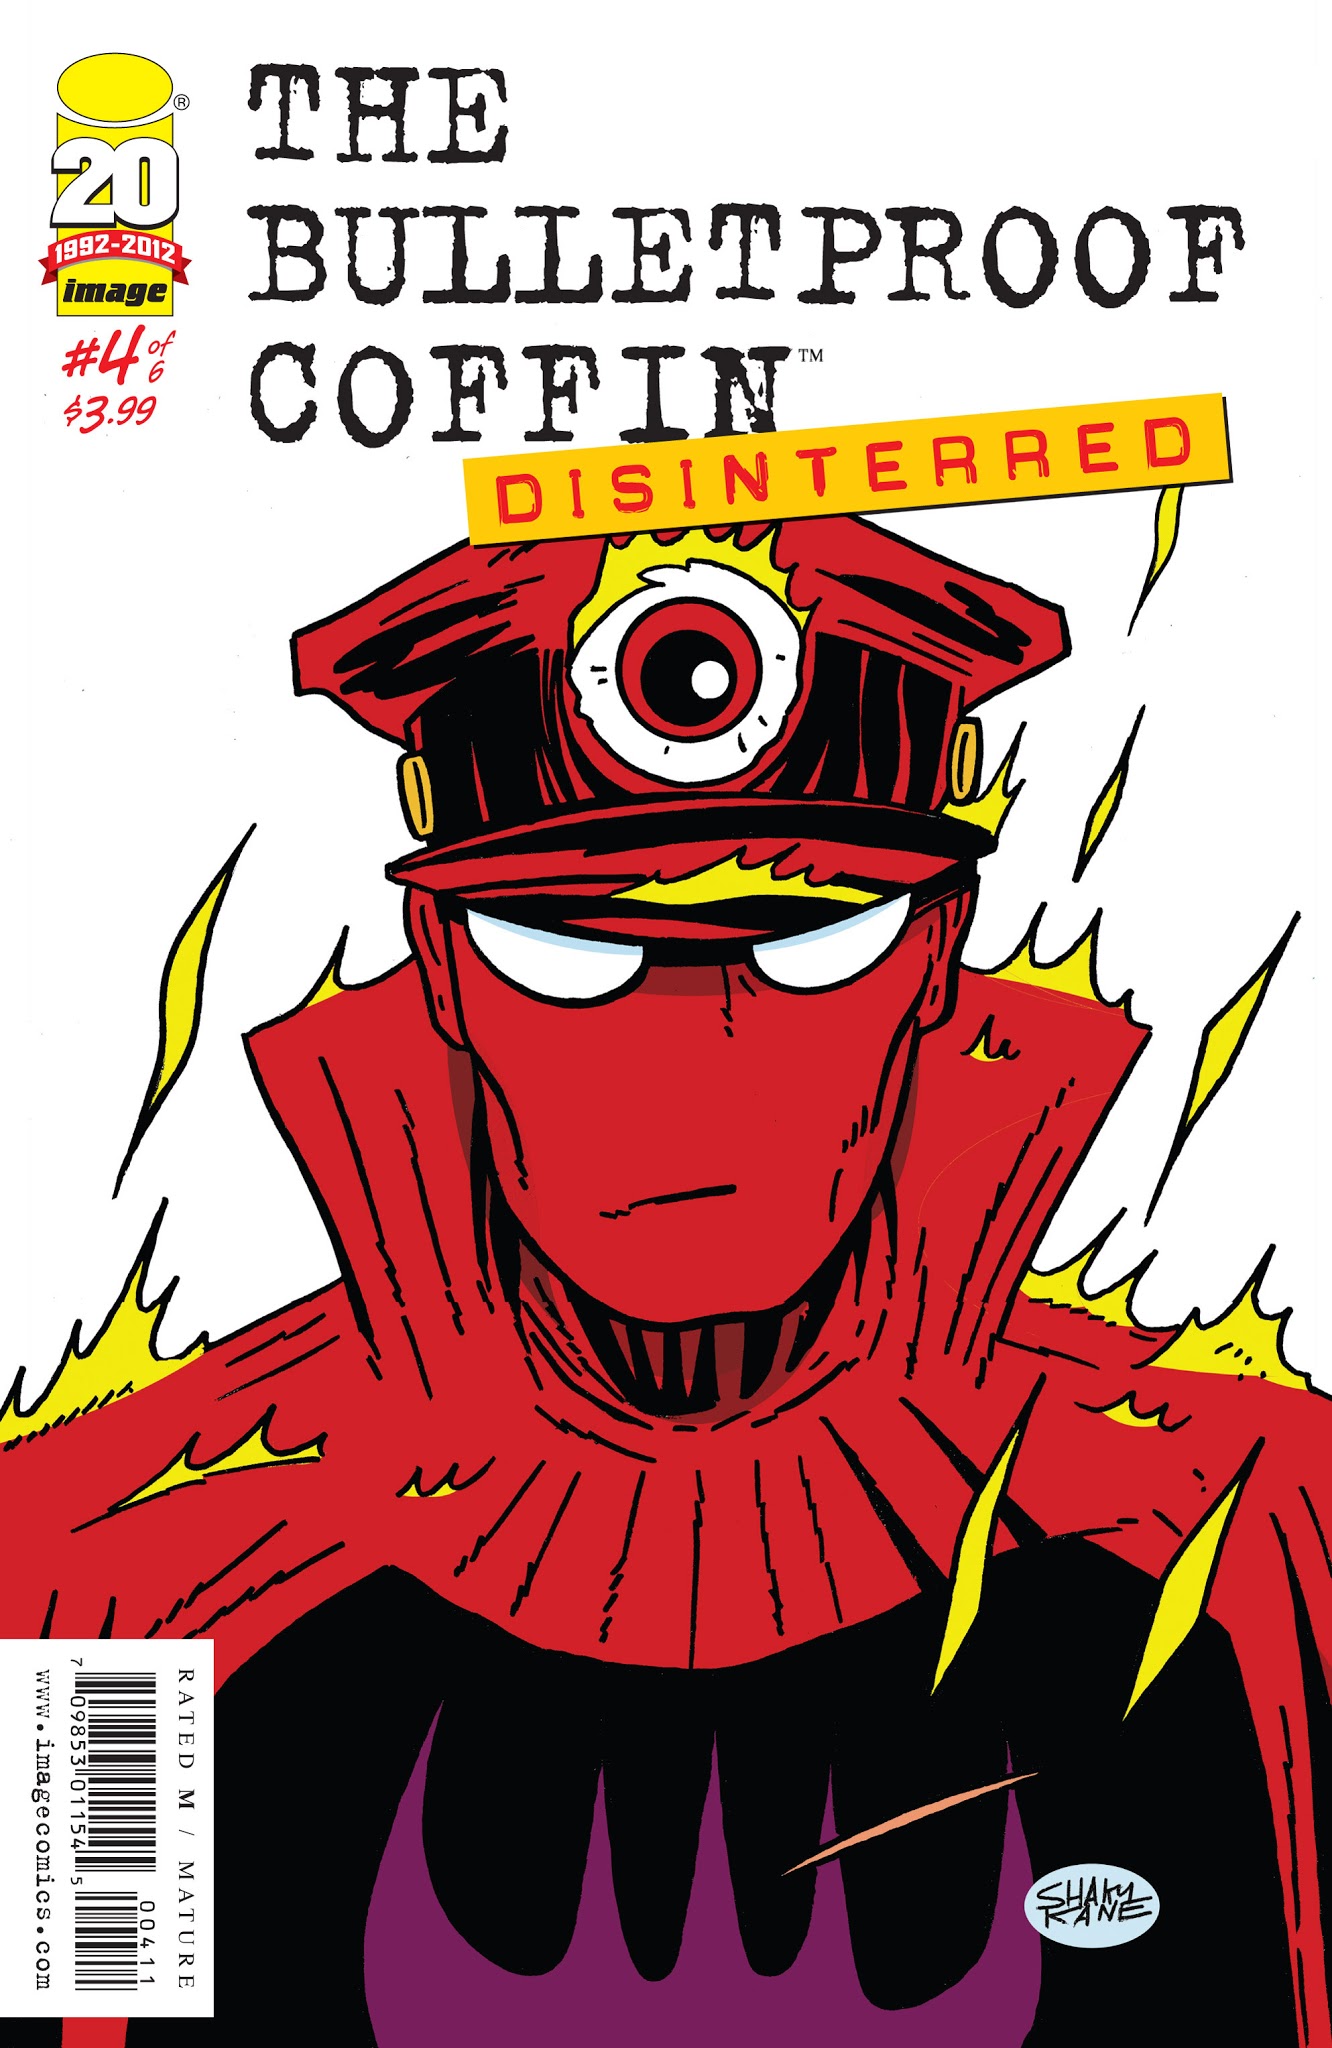 Read online Bulletproof Coffin: Disinterred comic -  Issue #4 - 1